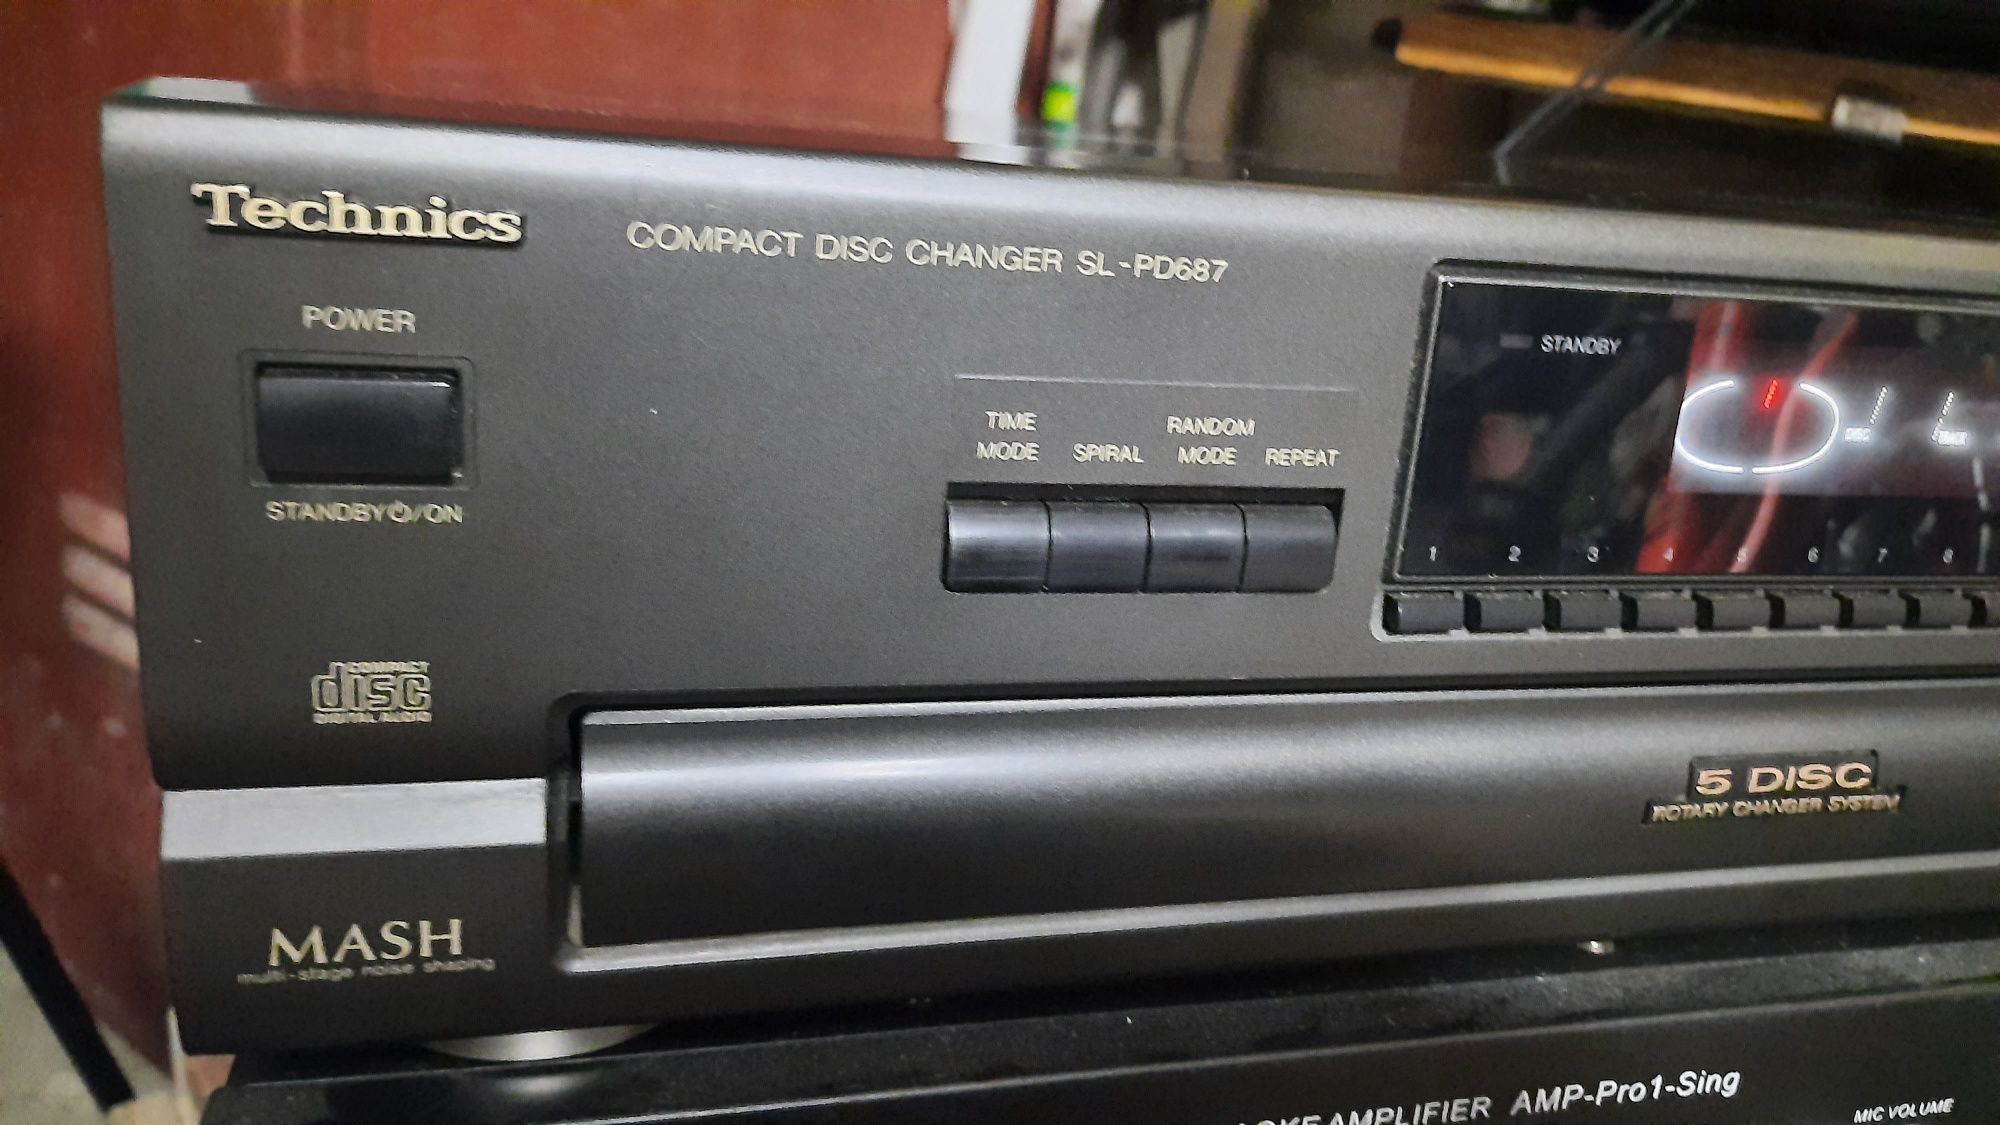 Odtwarzacz CD SL-PD687 Technics  5 disc